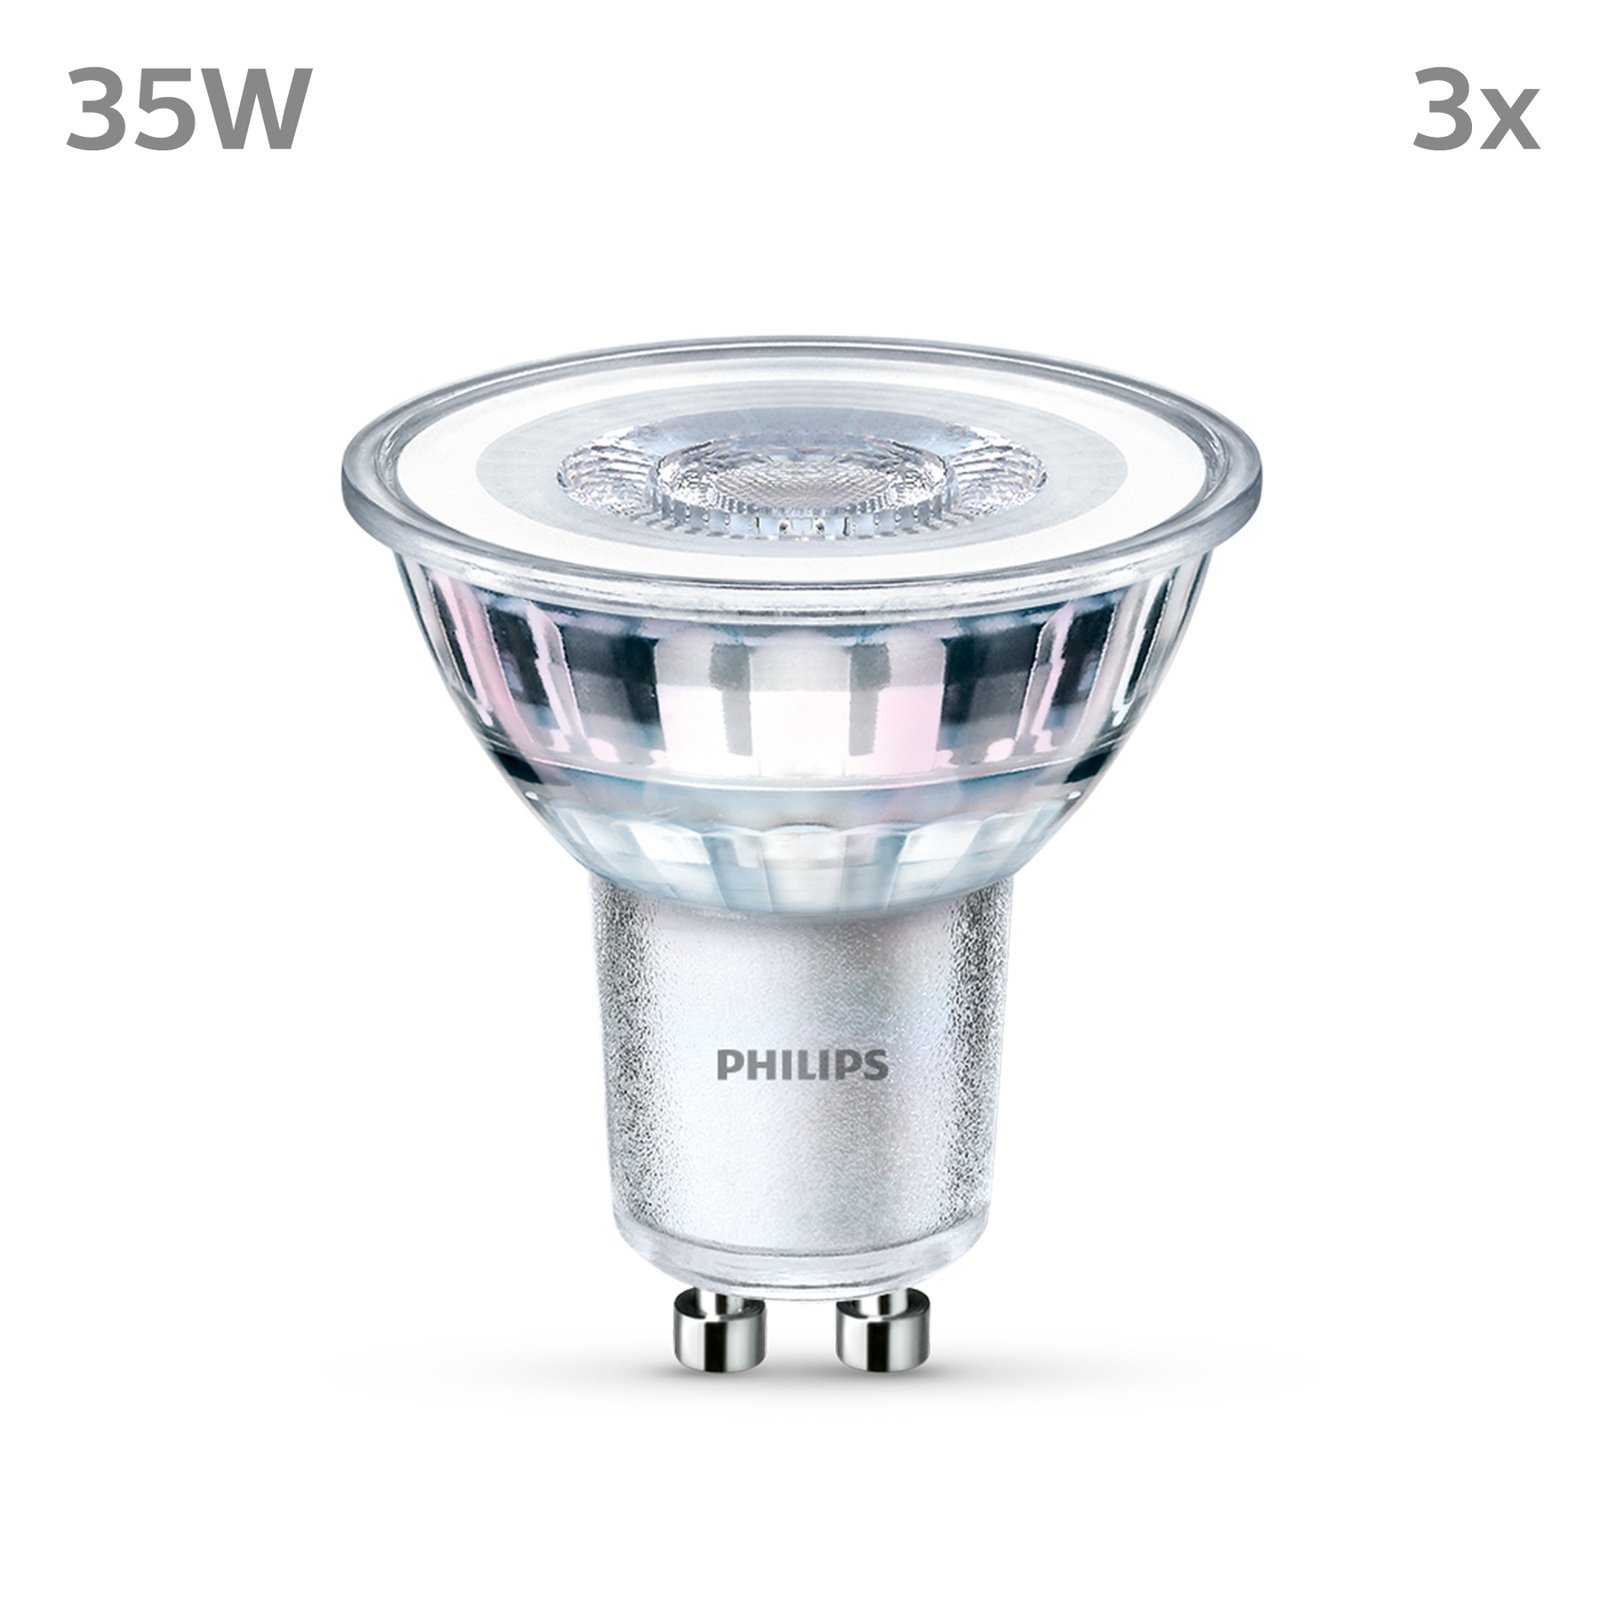 Philips LED bulb GU10 3.5W 255lm 827 clear 36° x3